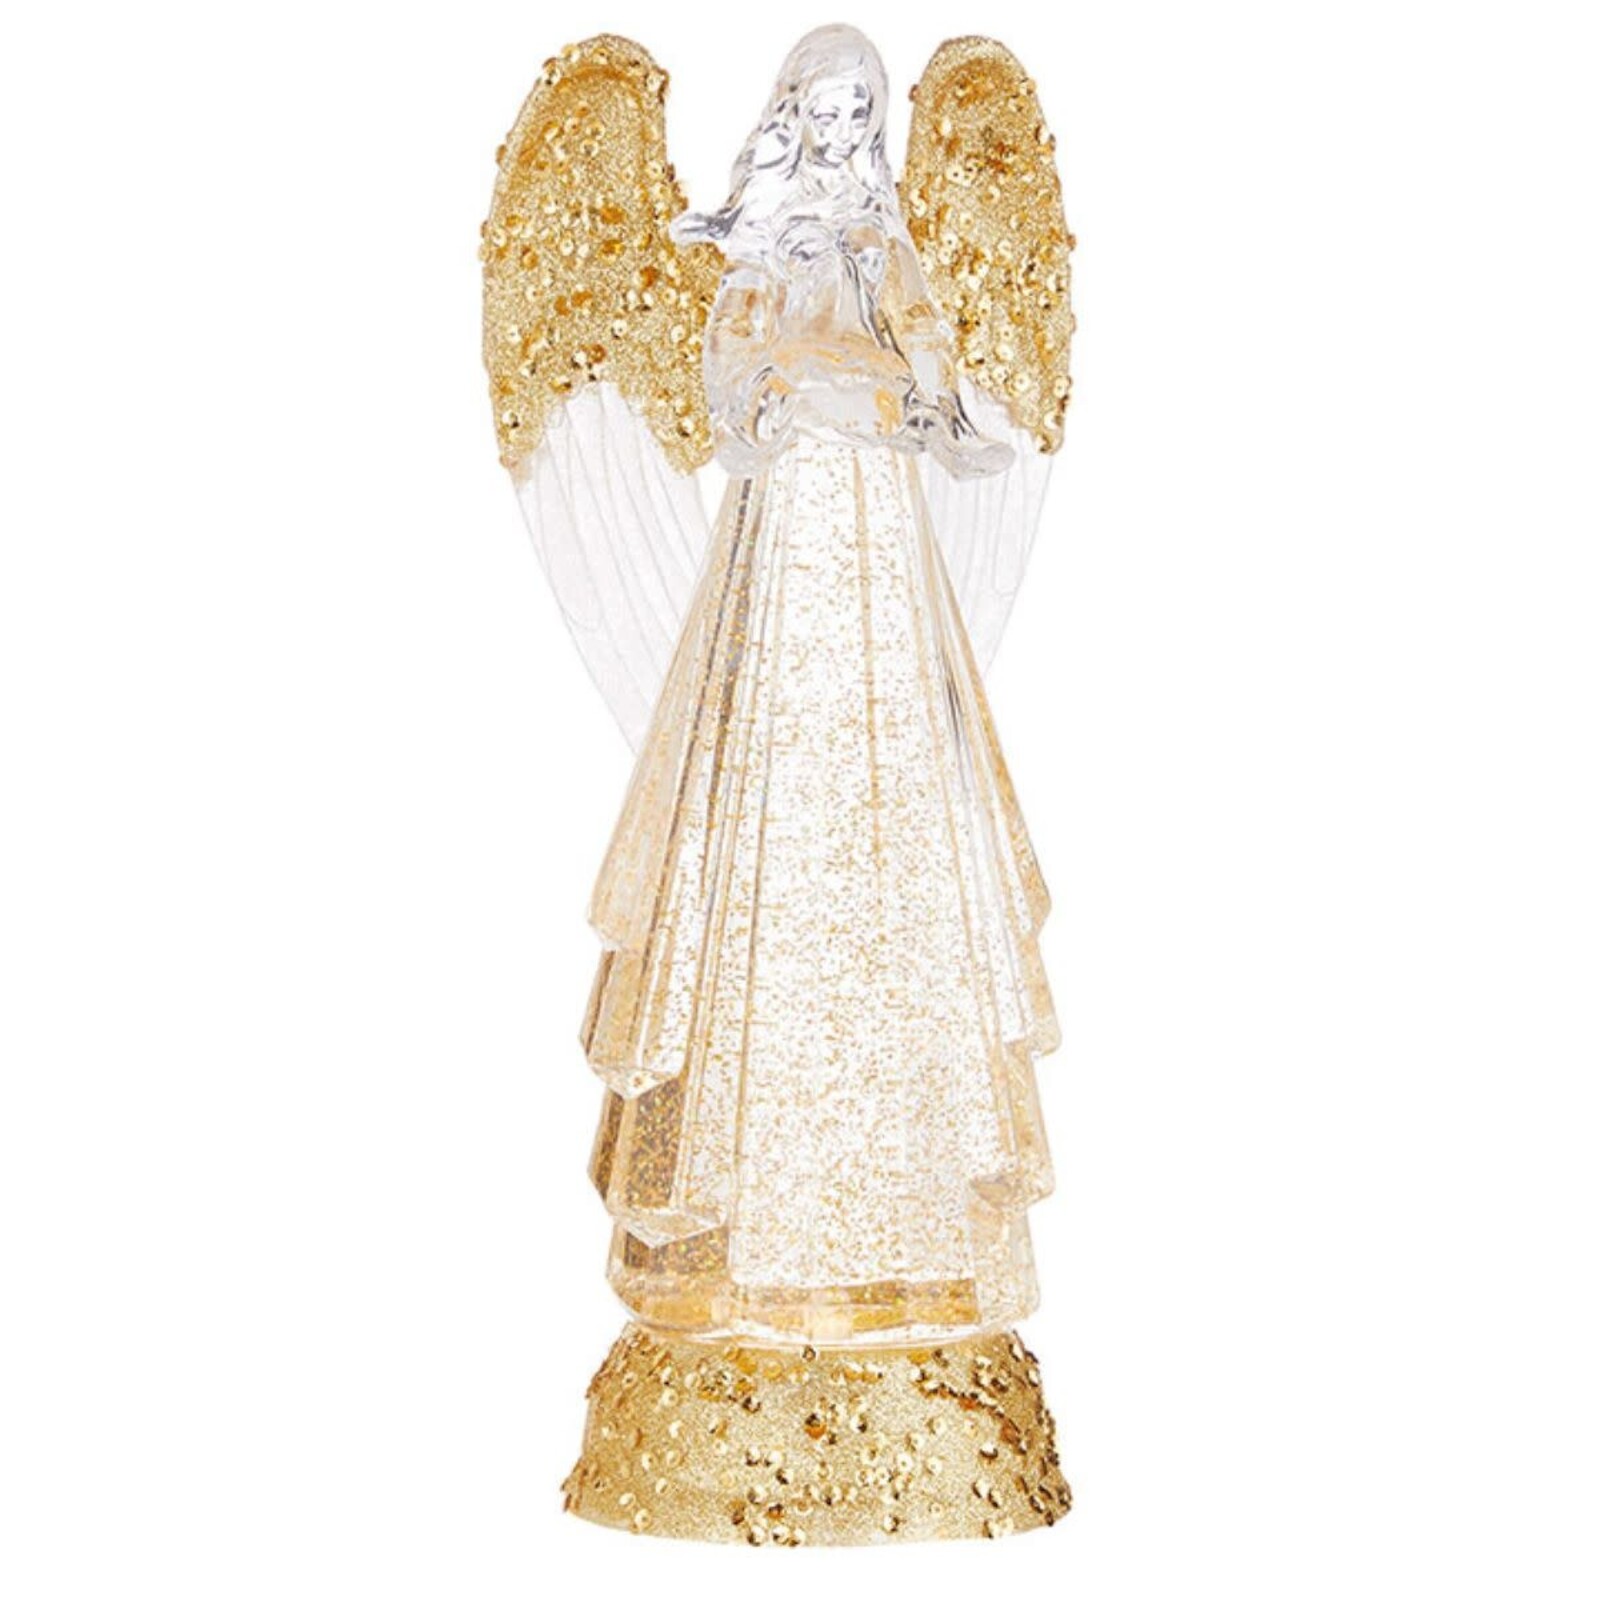 RAZ Imports Inc. 13" Light up Golden Angel with Swirling Glitter loading=